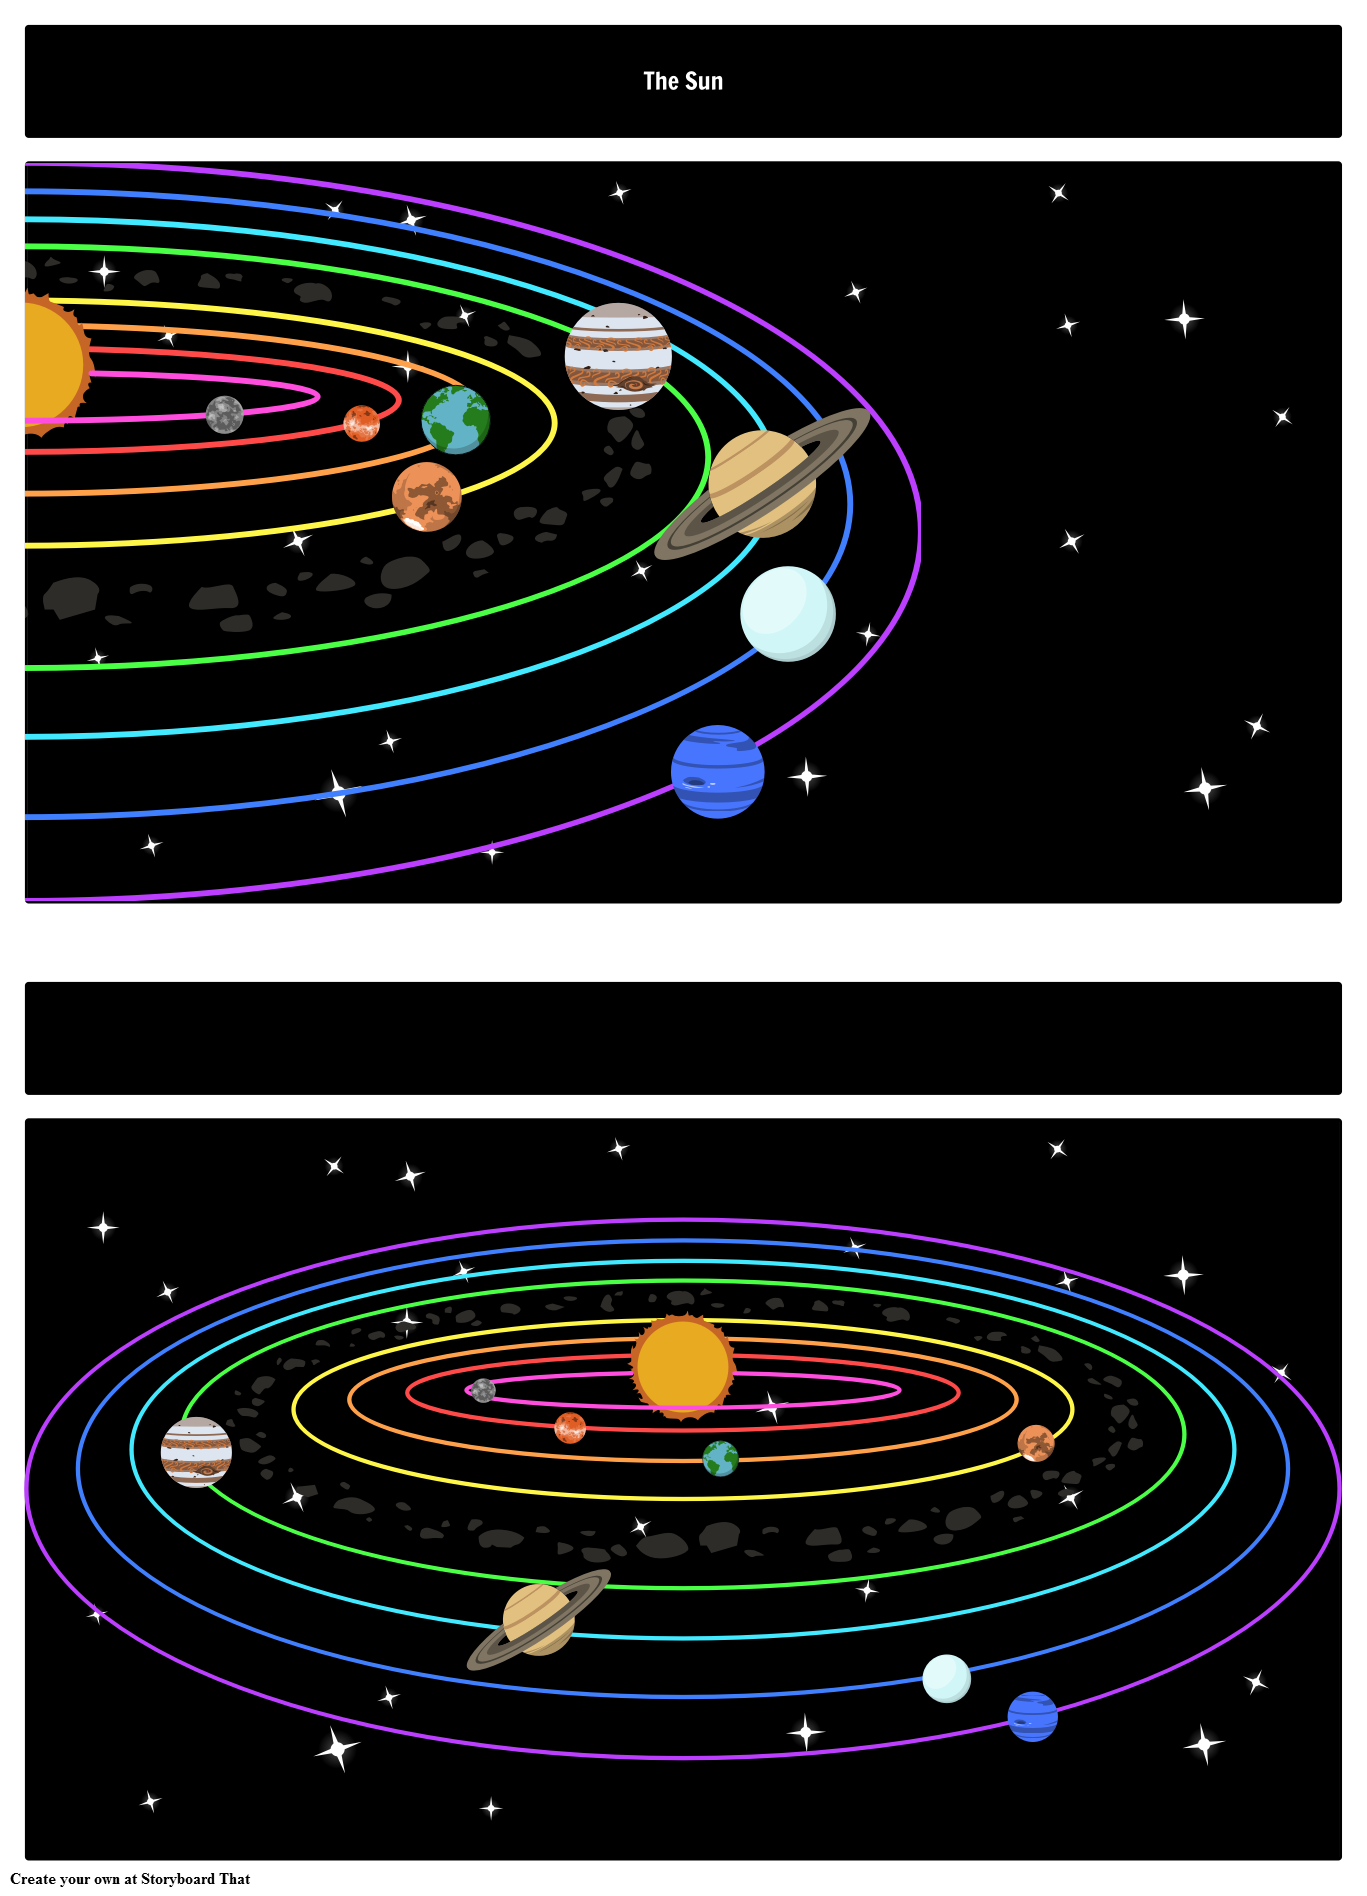 solar-system-storyboard-by-oliversmith